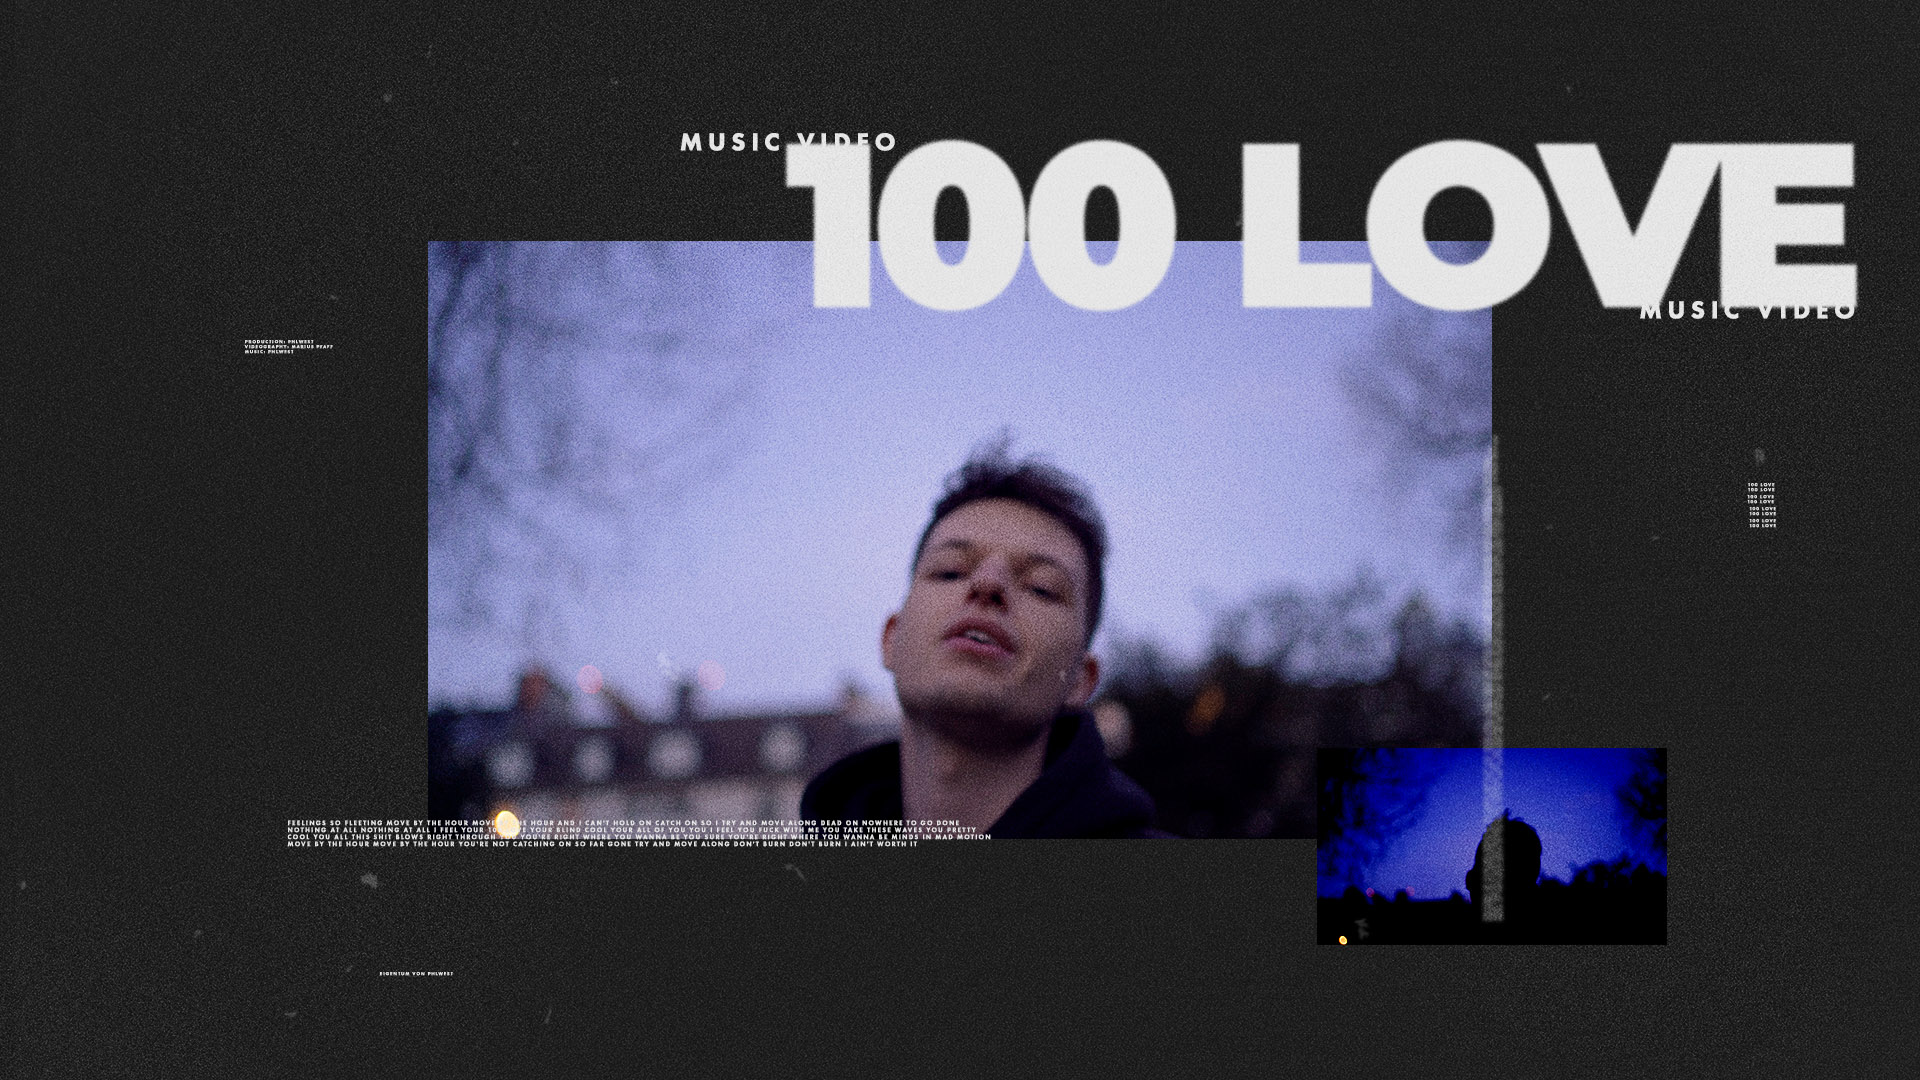 100 love music video